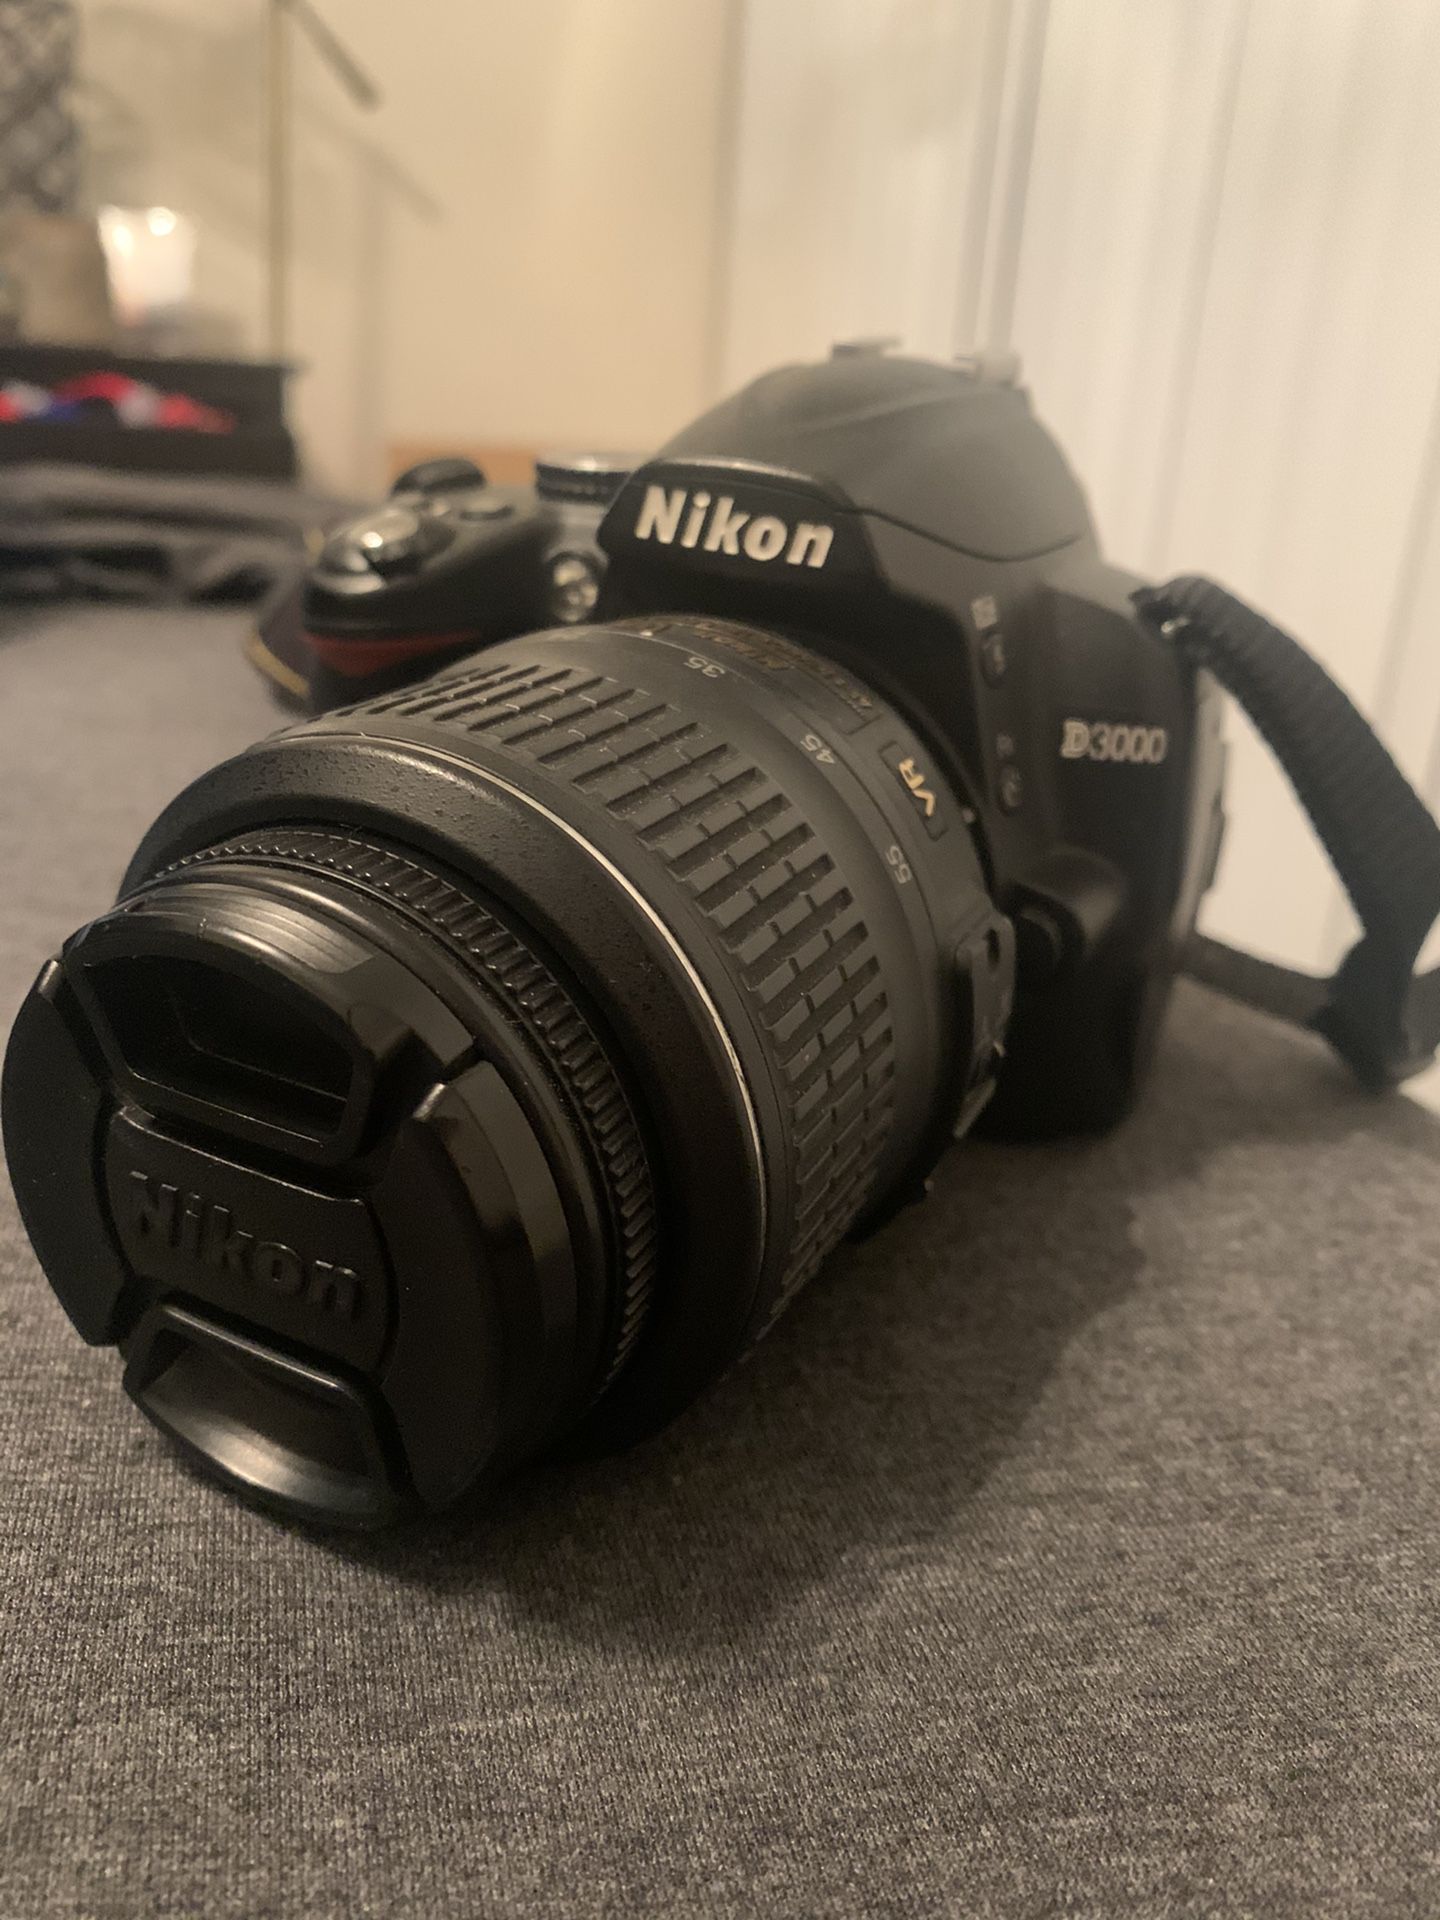 Nikon D3000 10MP Digital SLR Camera with 18-55mm f/3.5-5.6G Zoom Lens